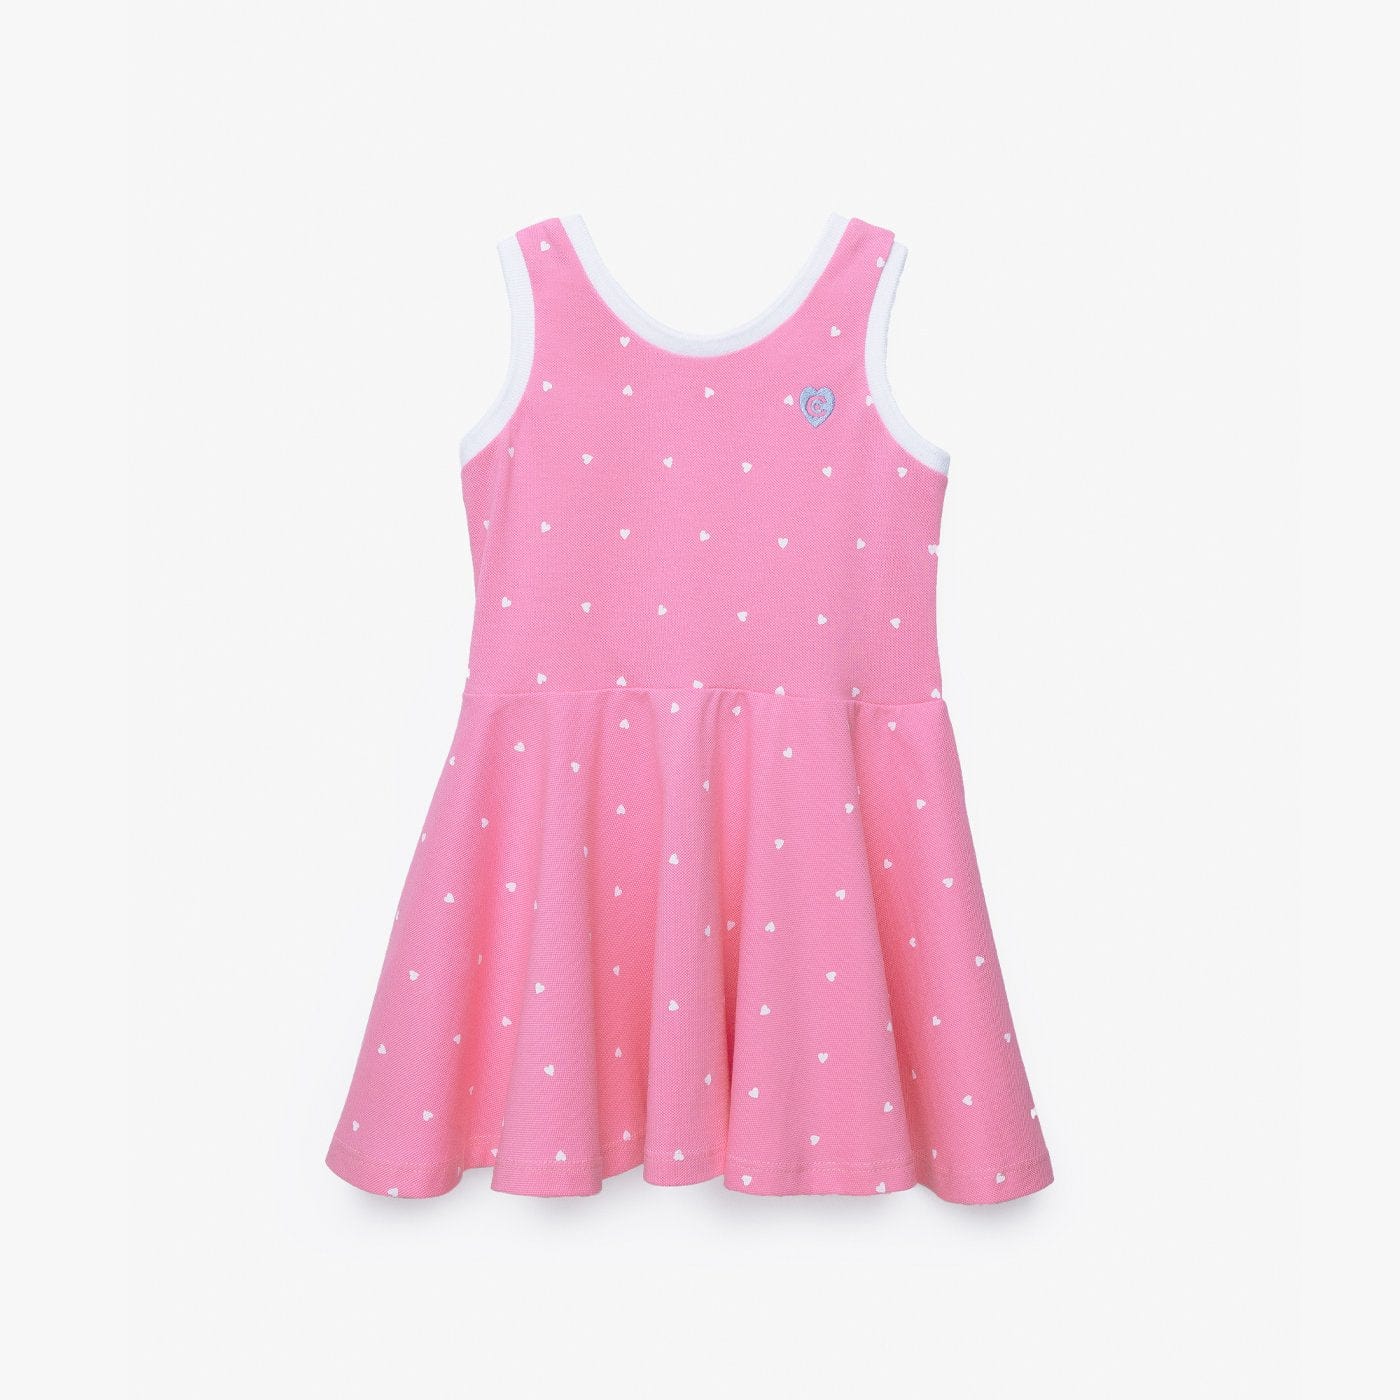 CONGUITOS TEXTIL Clothing Girl's Pink Hearts Skater Dress